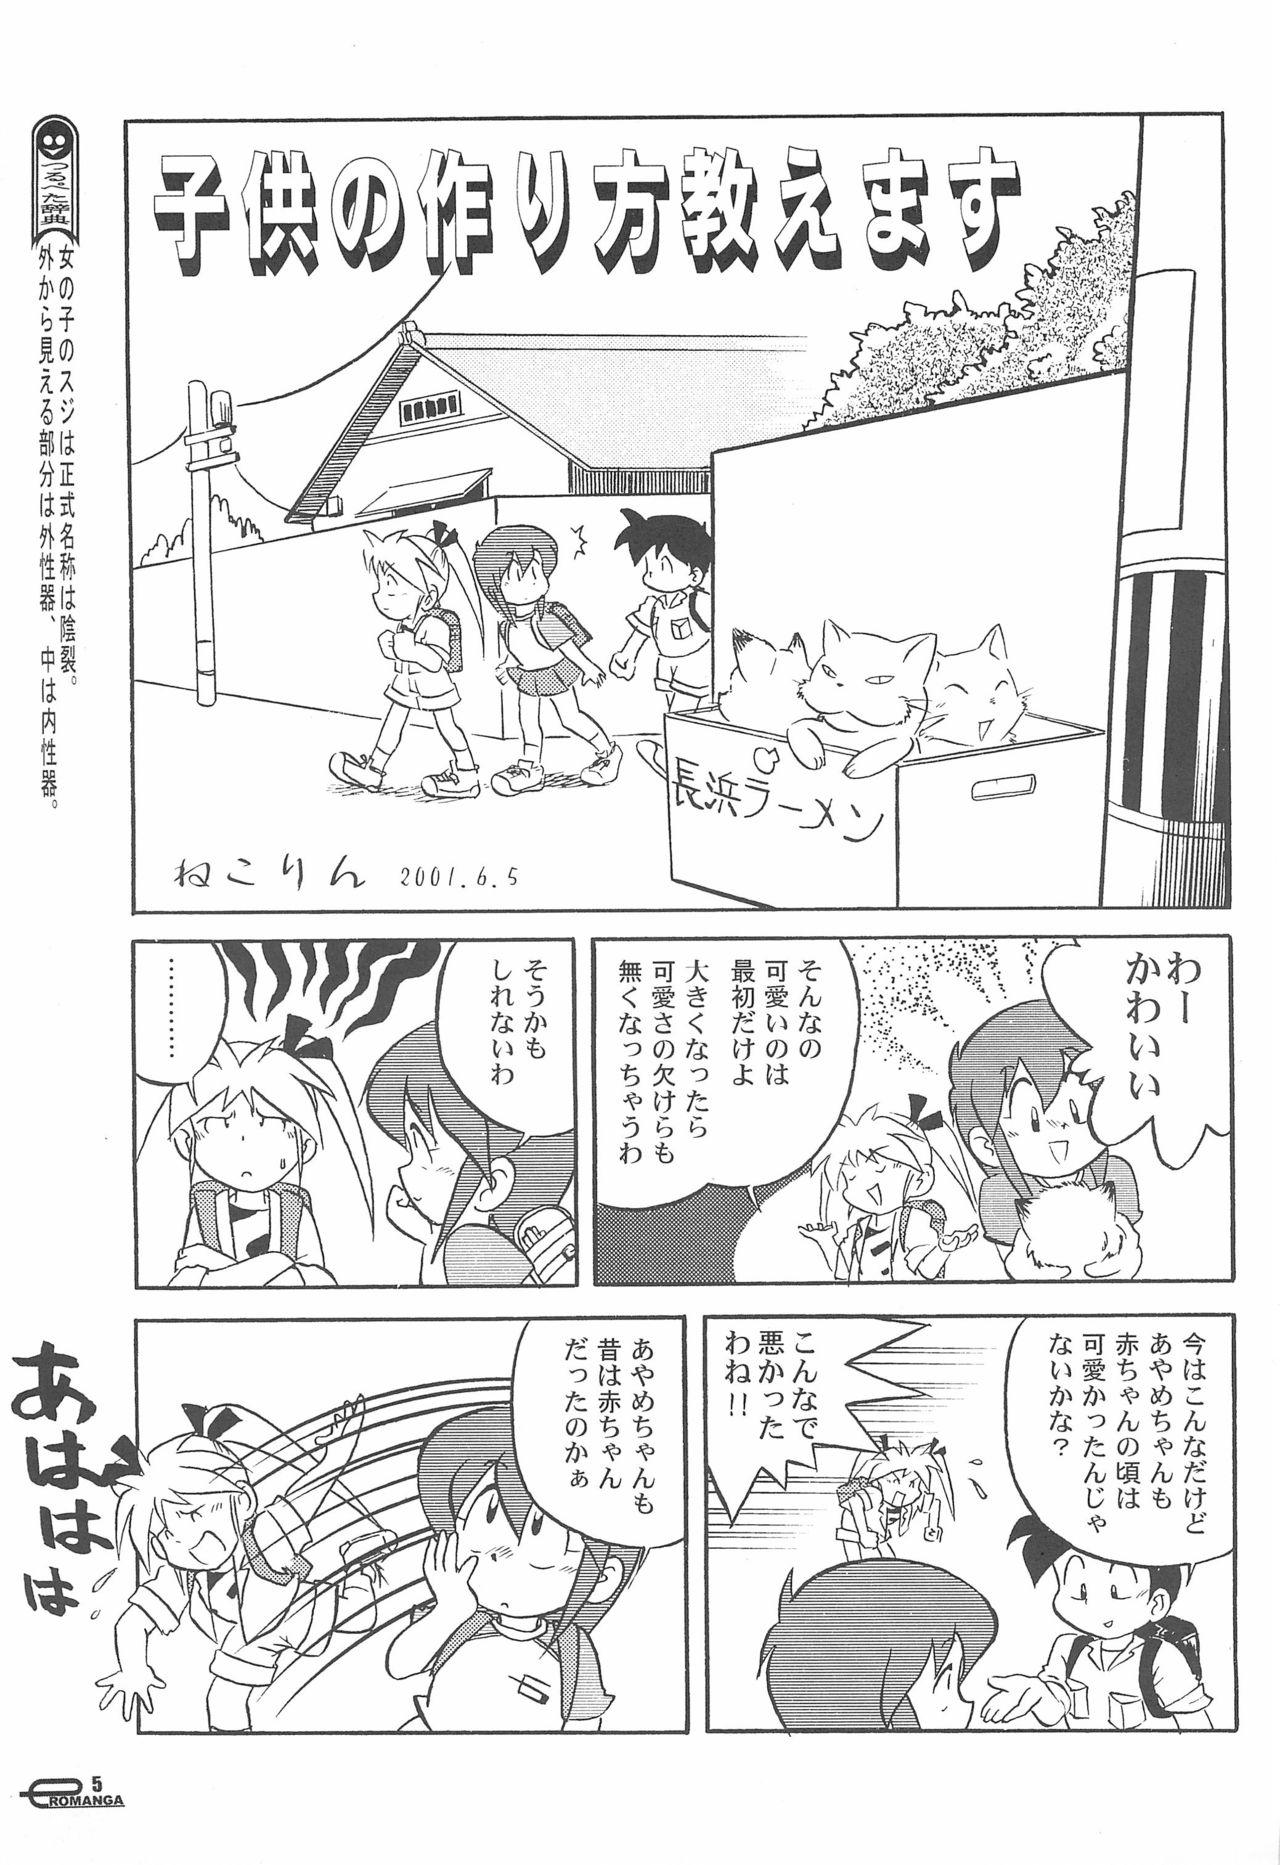 Trannies Manga Science Onna no ko no Himitsu - Manga science Oldman - Page 7